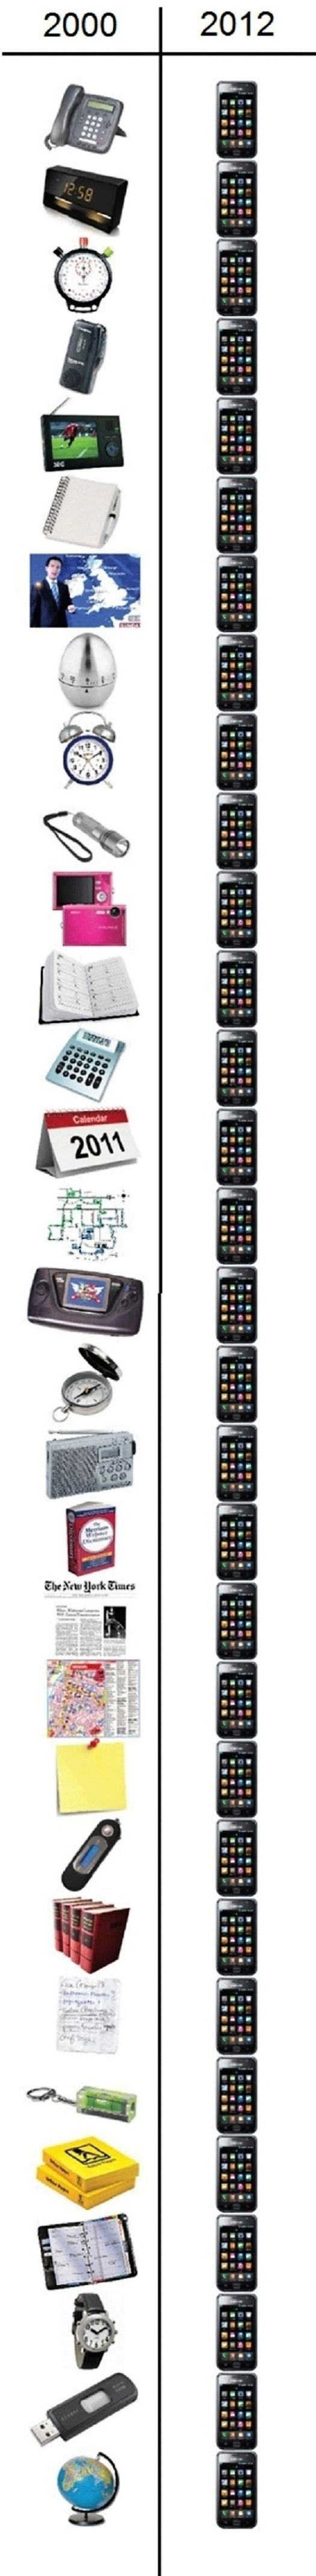 Obrázek The Gadgets of 2000 vs Today 20-03-2012